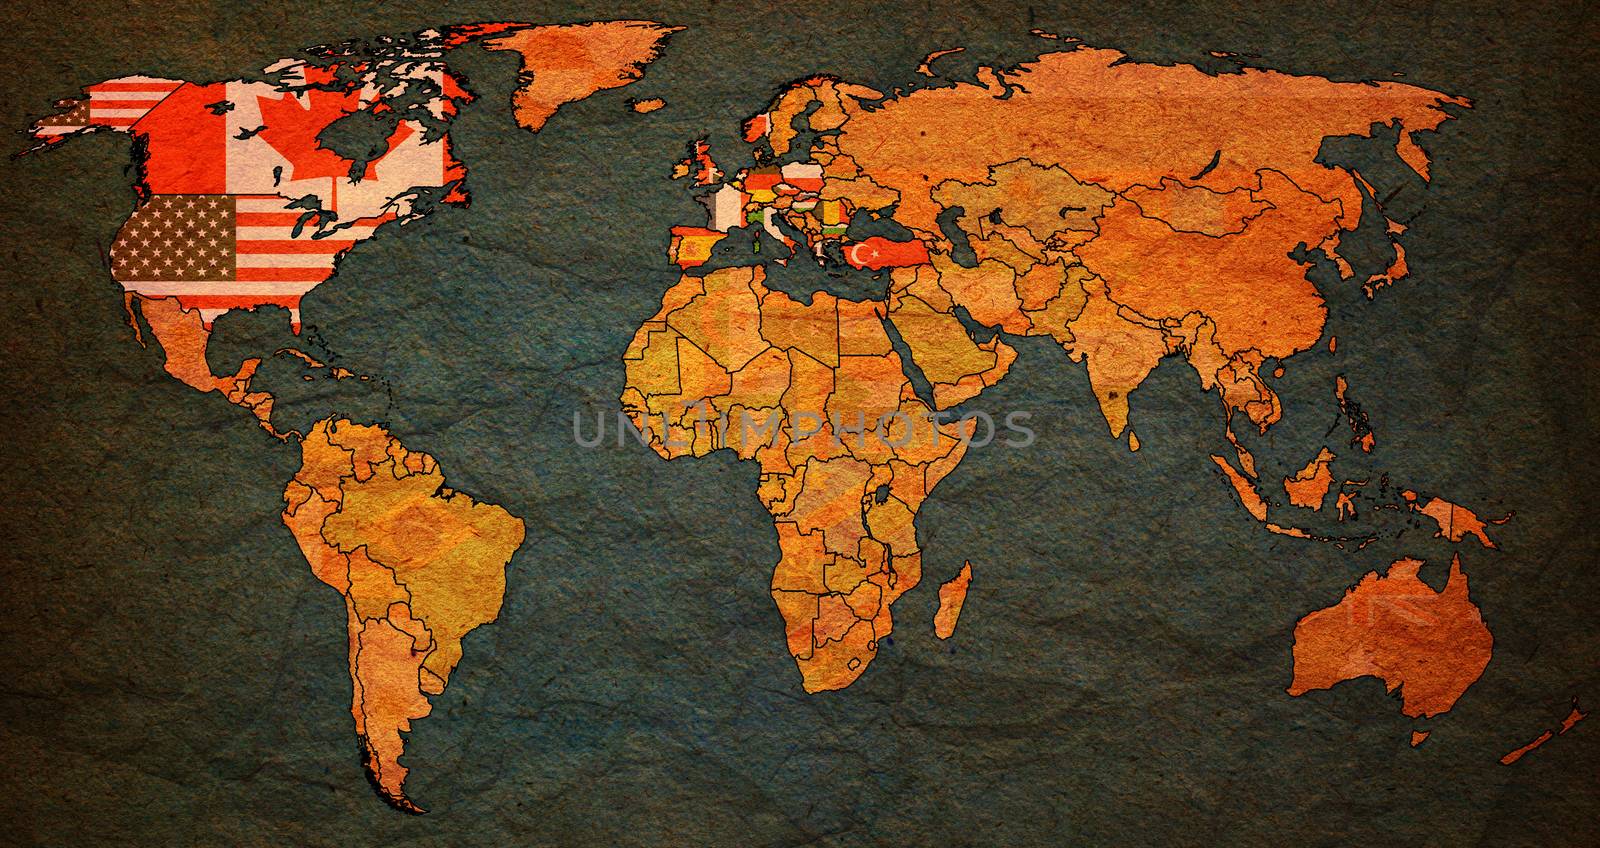 North Atlantic Treaty Organization onl world map by michal812